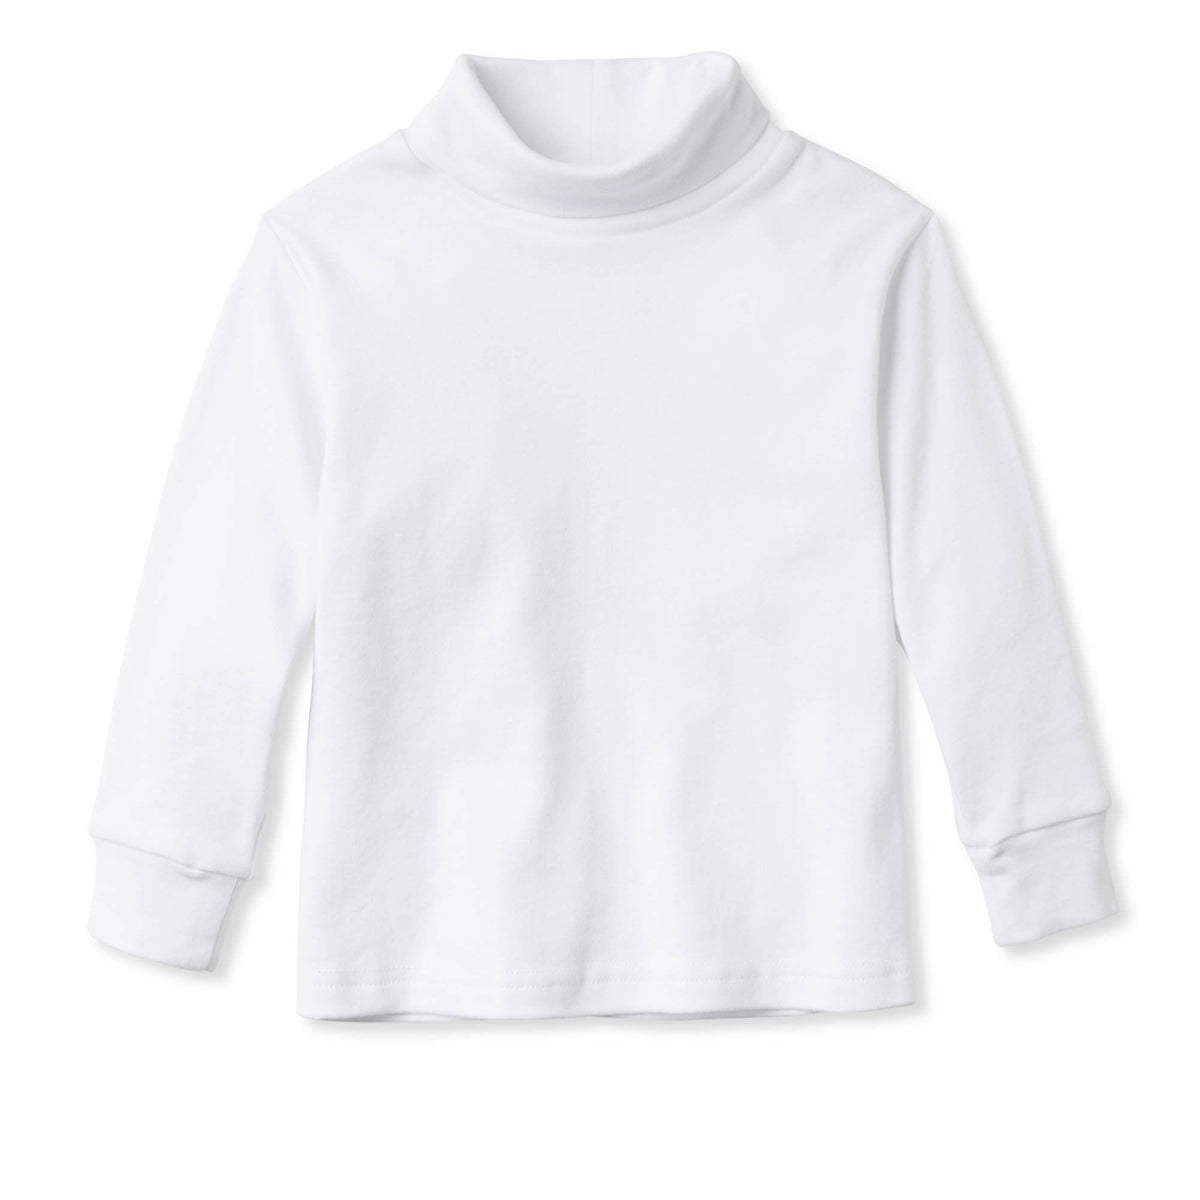 Classic and Preppy Patrick Turtleneck Solid, Bright White-Shirts and Tops-Bright White-2T-CPC - Classic Prep Childrenswear